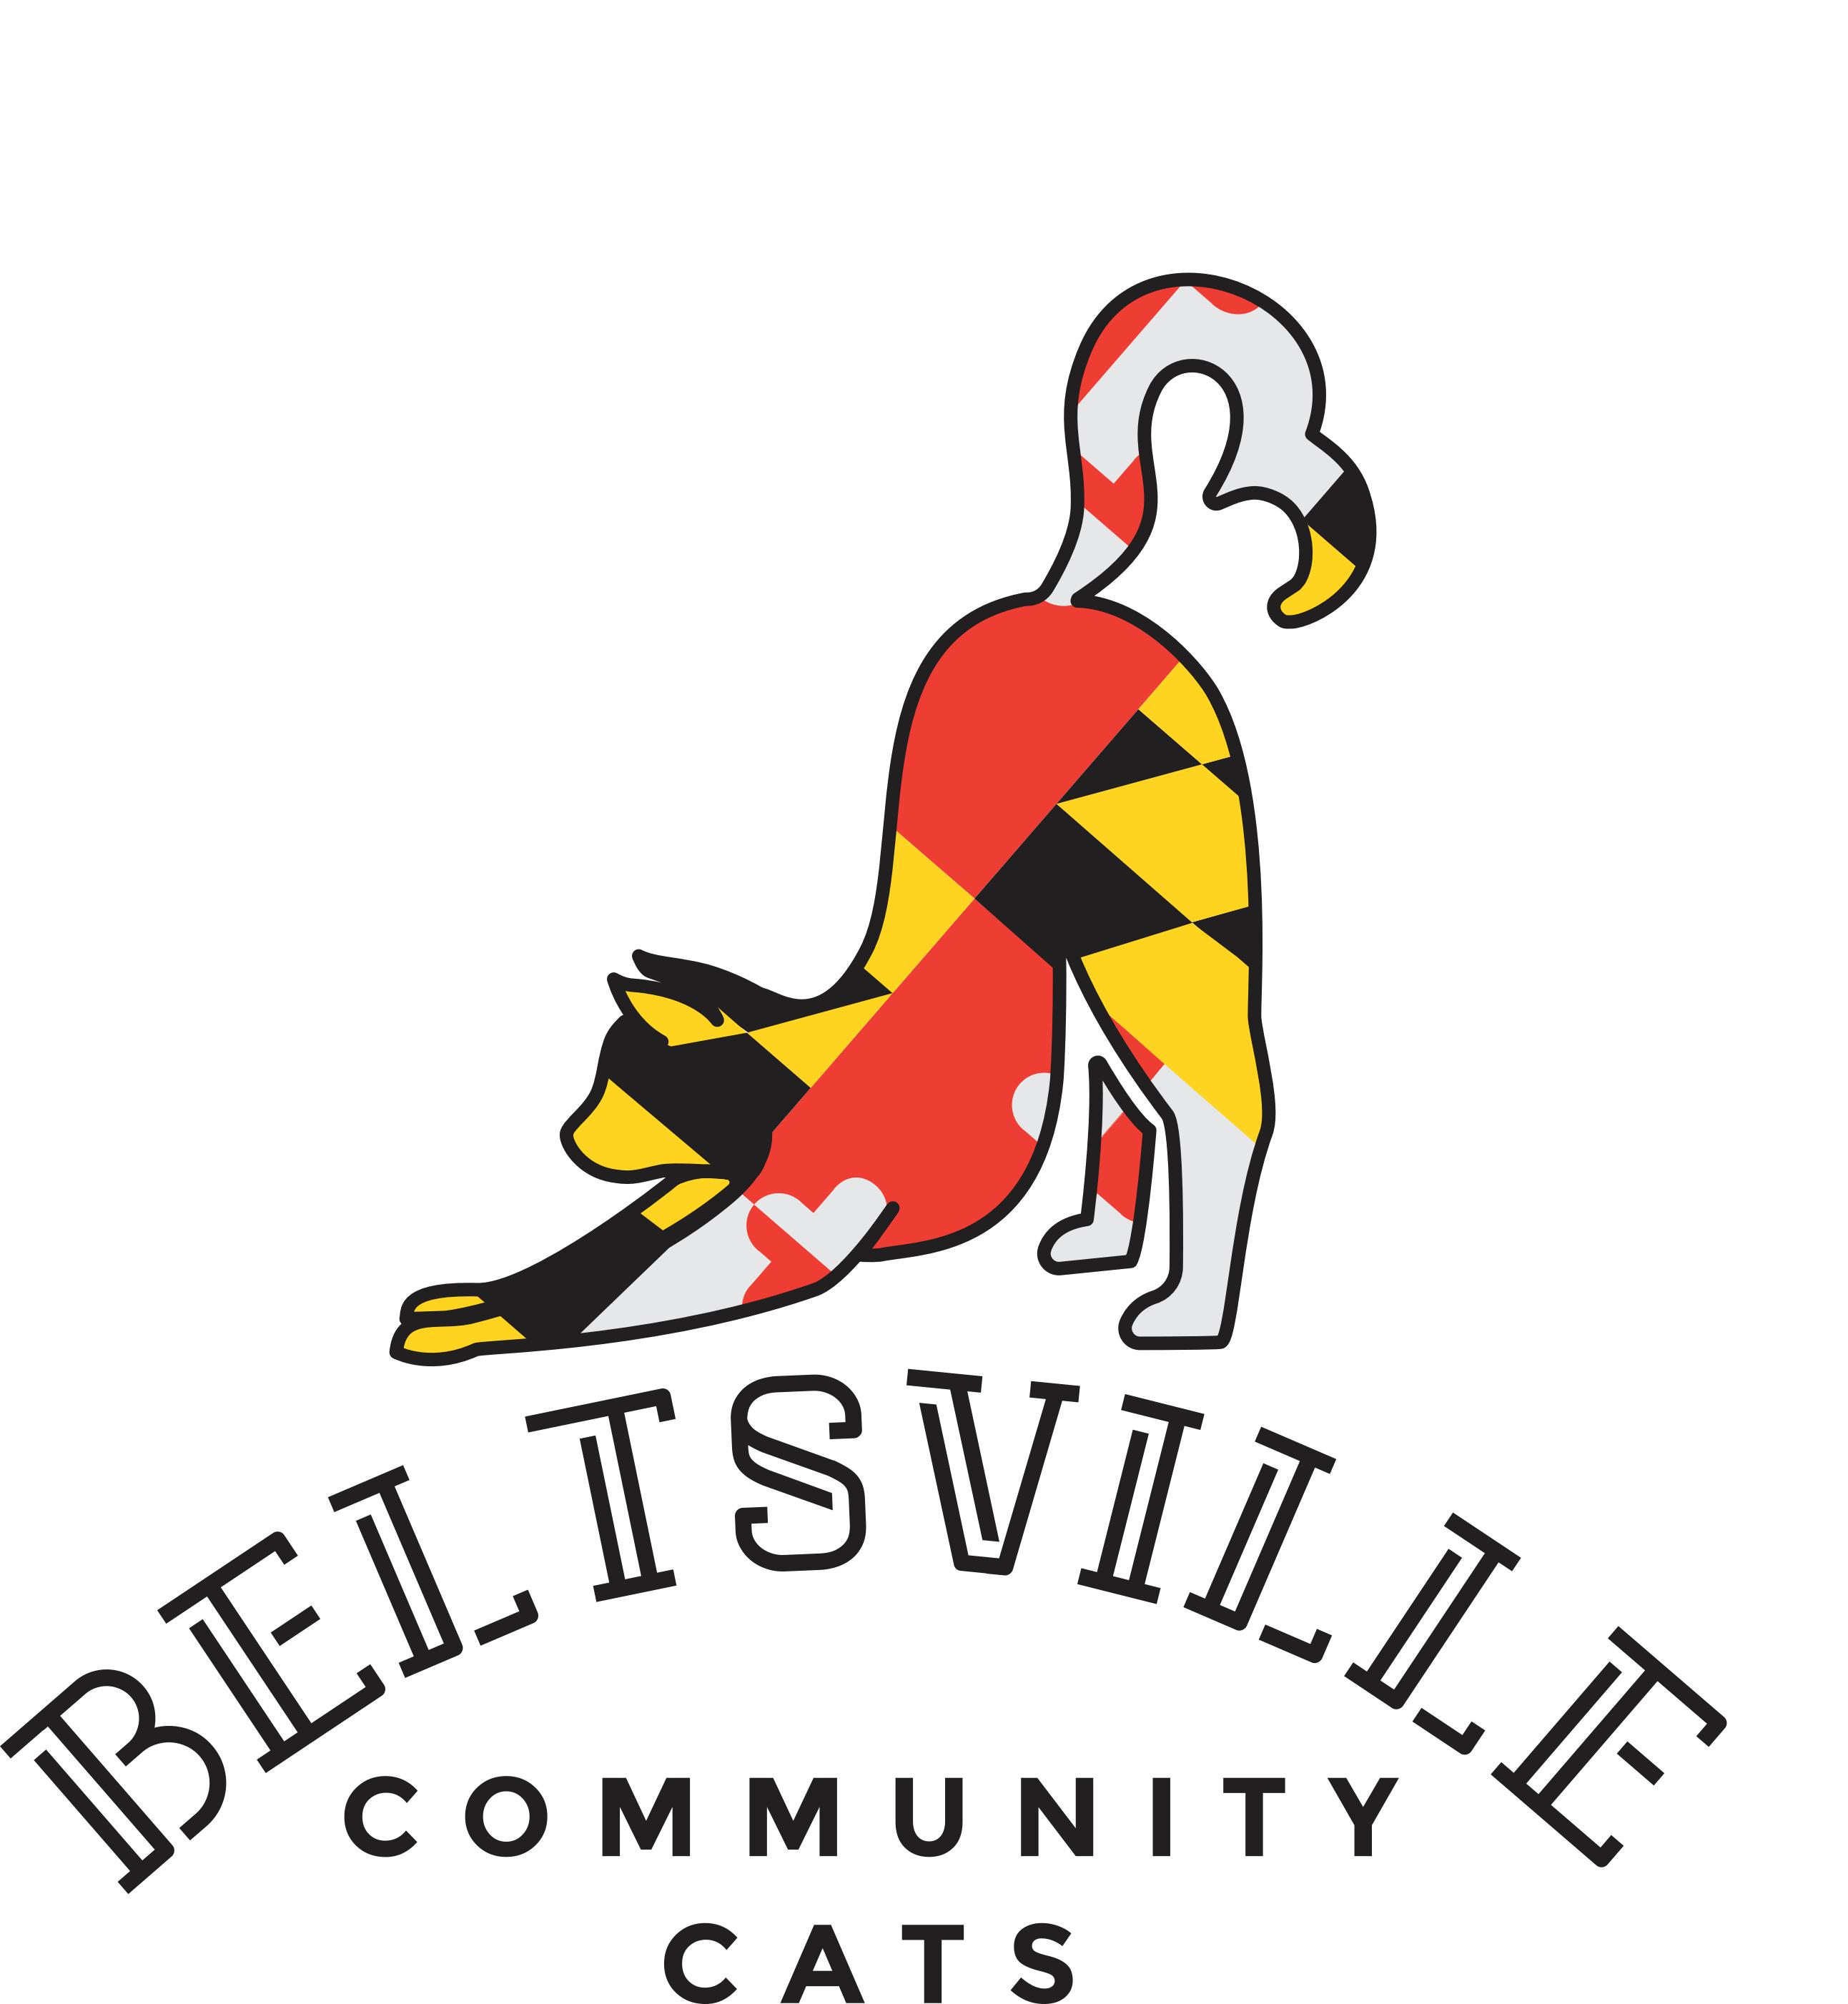 Beltsville Community Cats